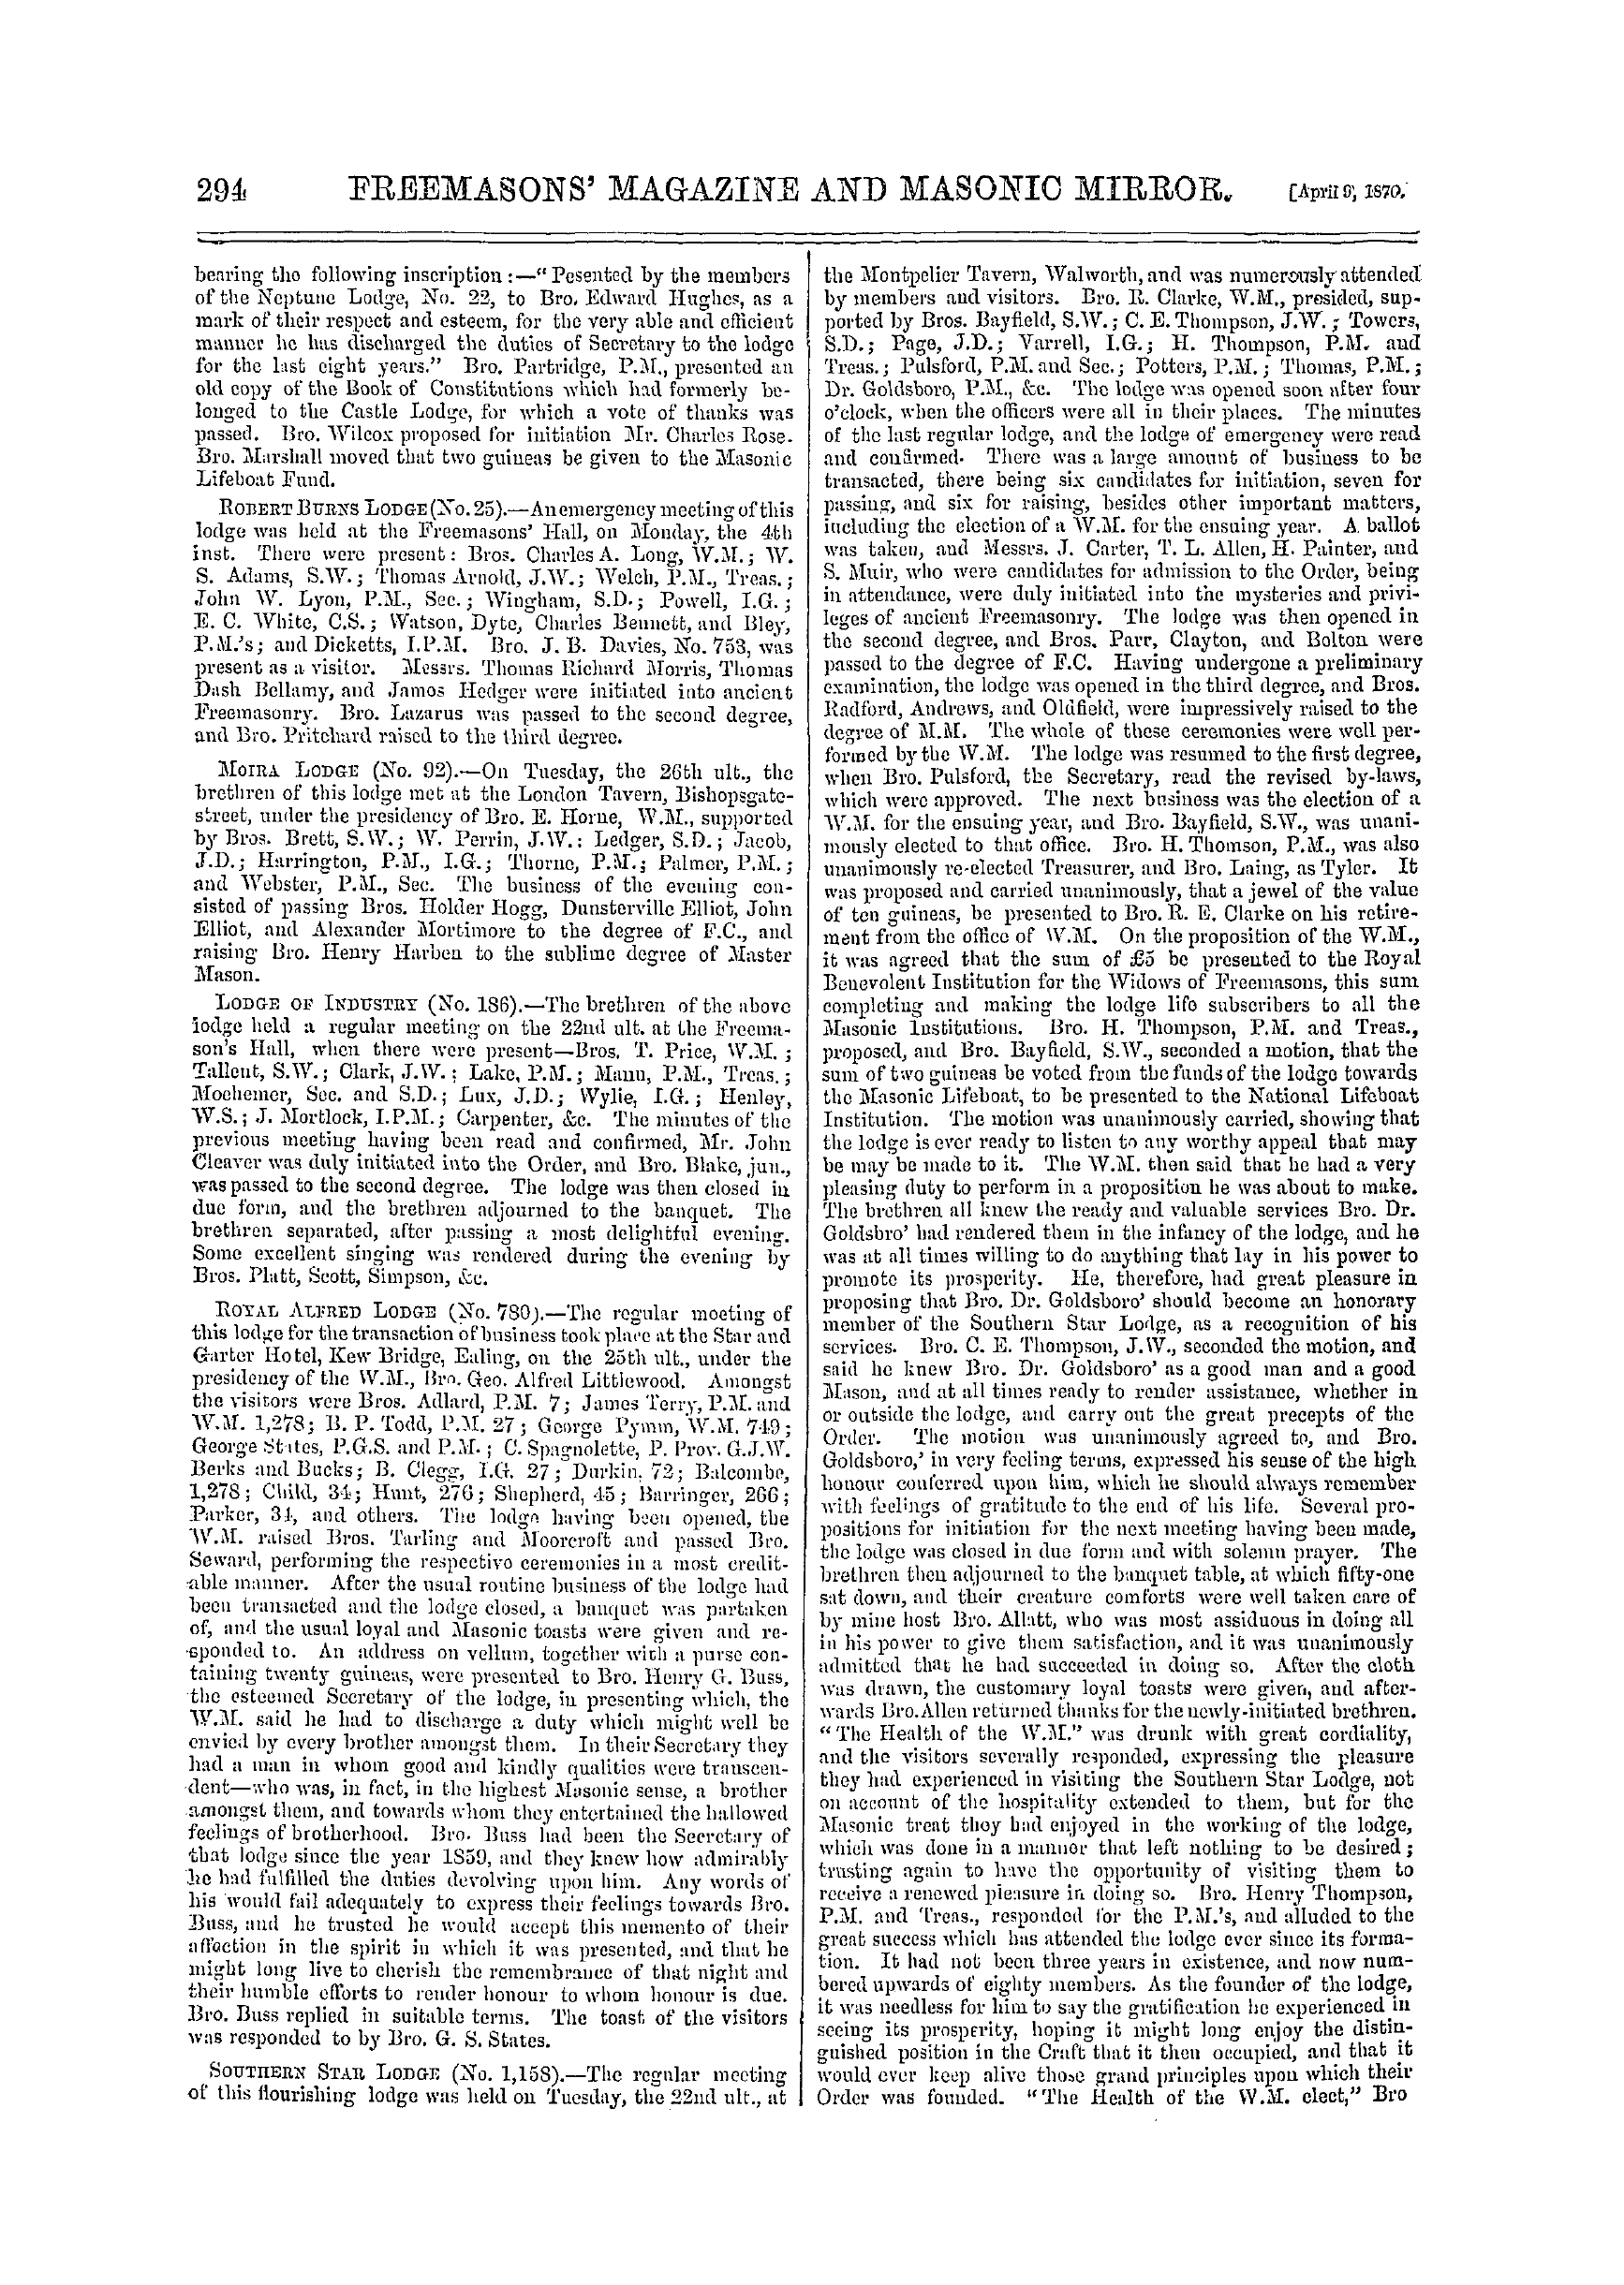 The Freemasons' Monthly Magazine: 1870-04-09 - Craft Masonry.